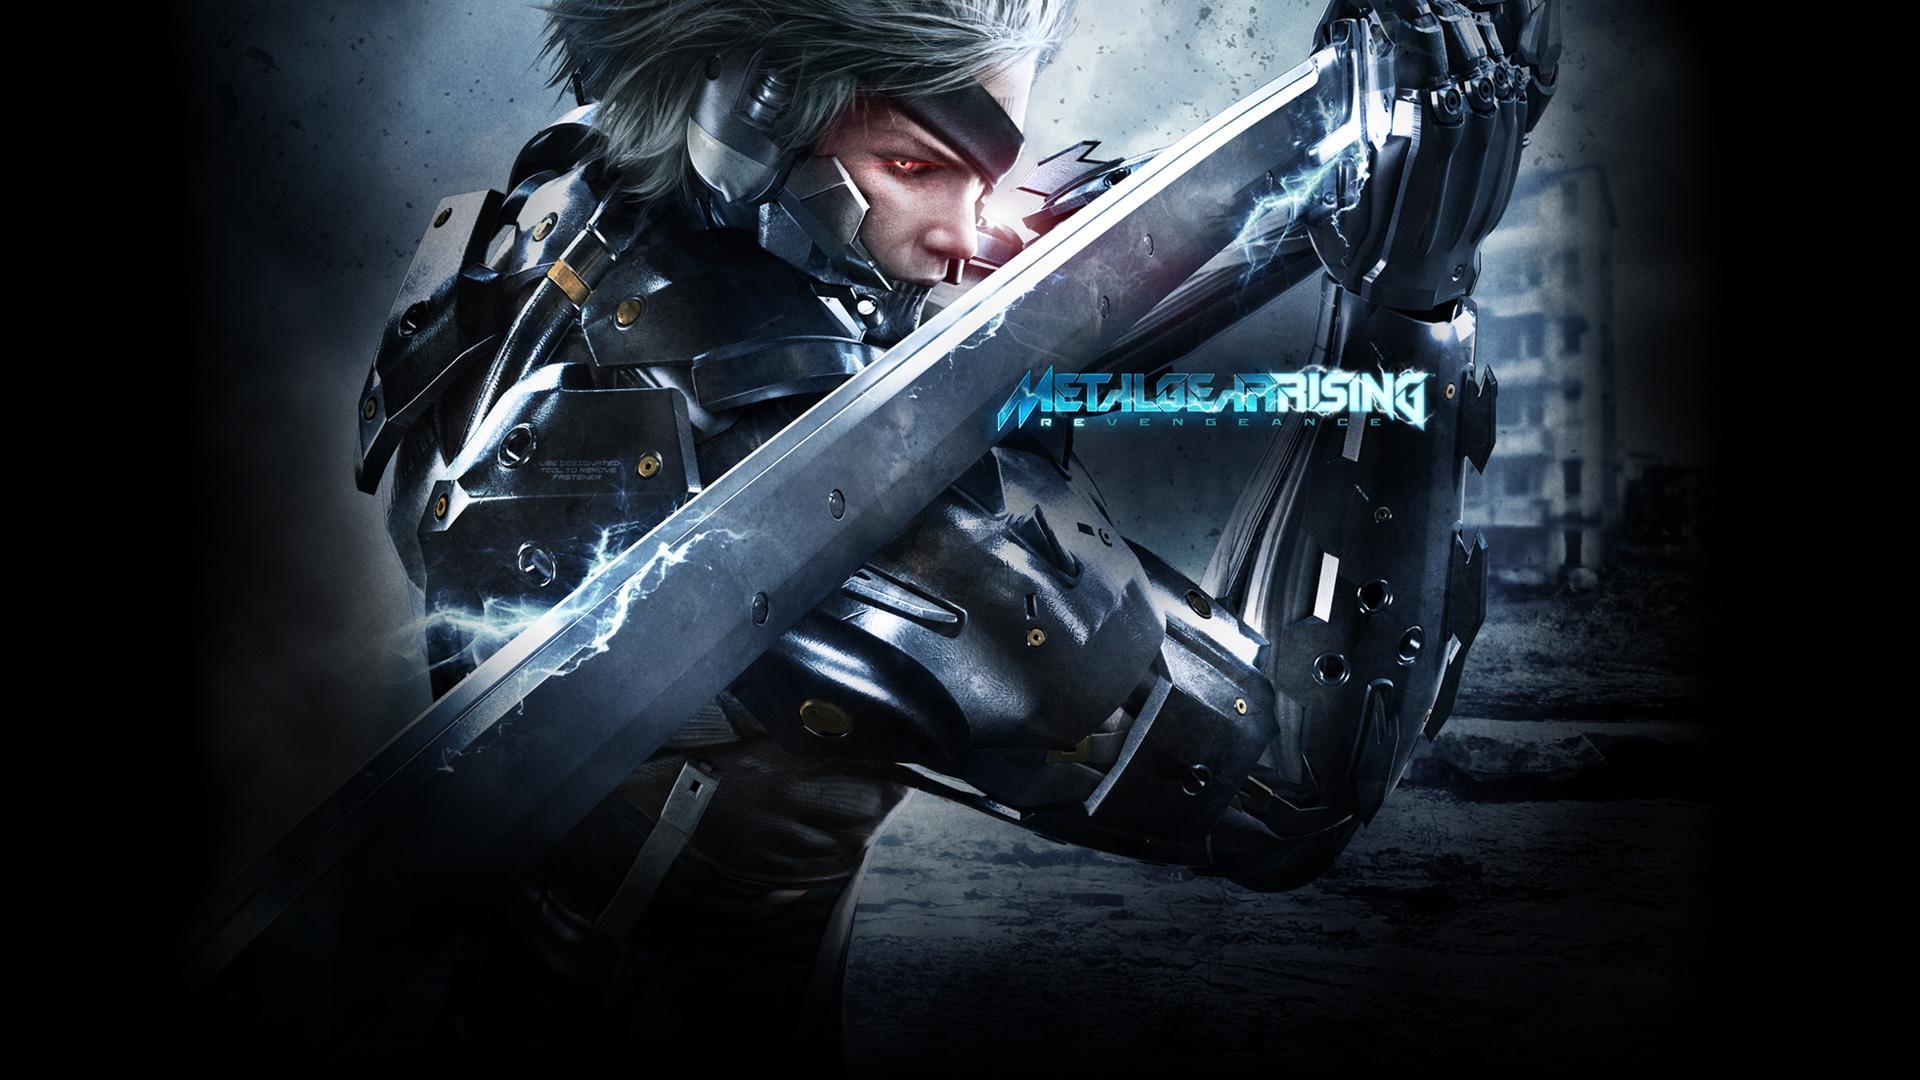 Metal Gear Rising: Revengeance Wallpaper. Metal Gear Rising